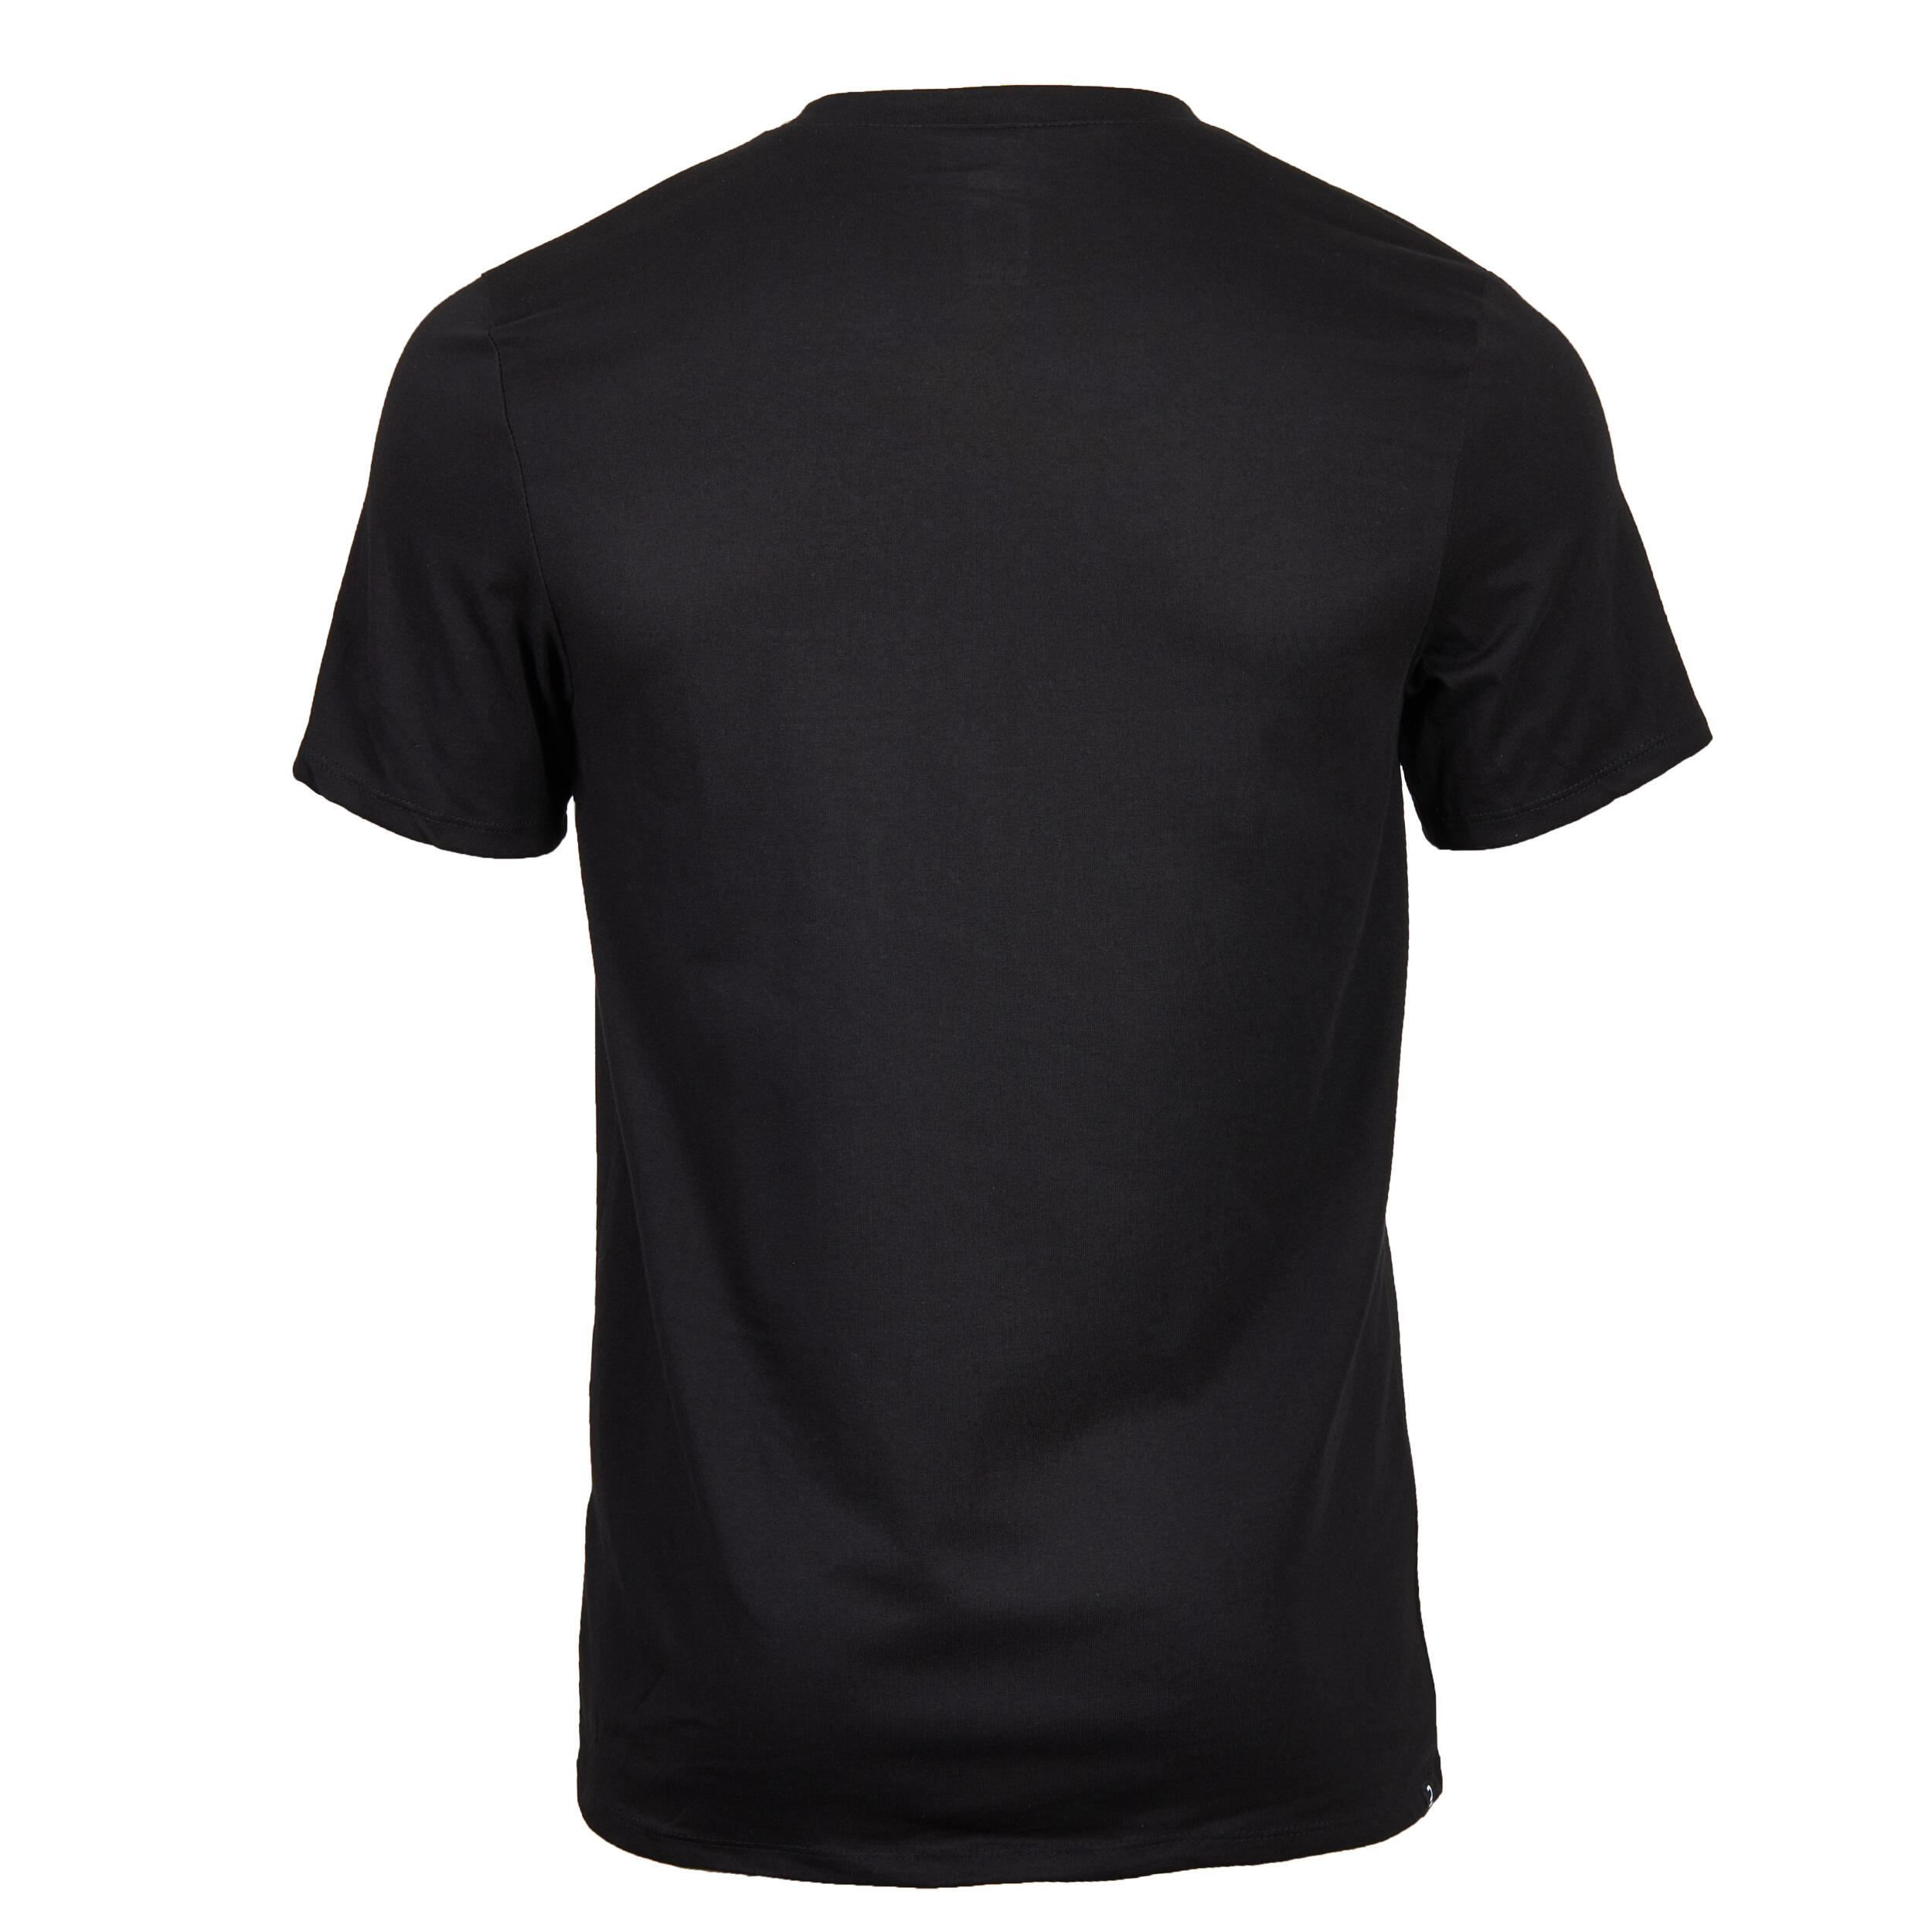 Men's Slim-Fit Fitness T-Shirt 500 - Grey - Decathlon